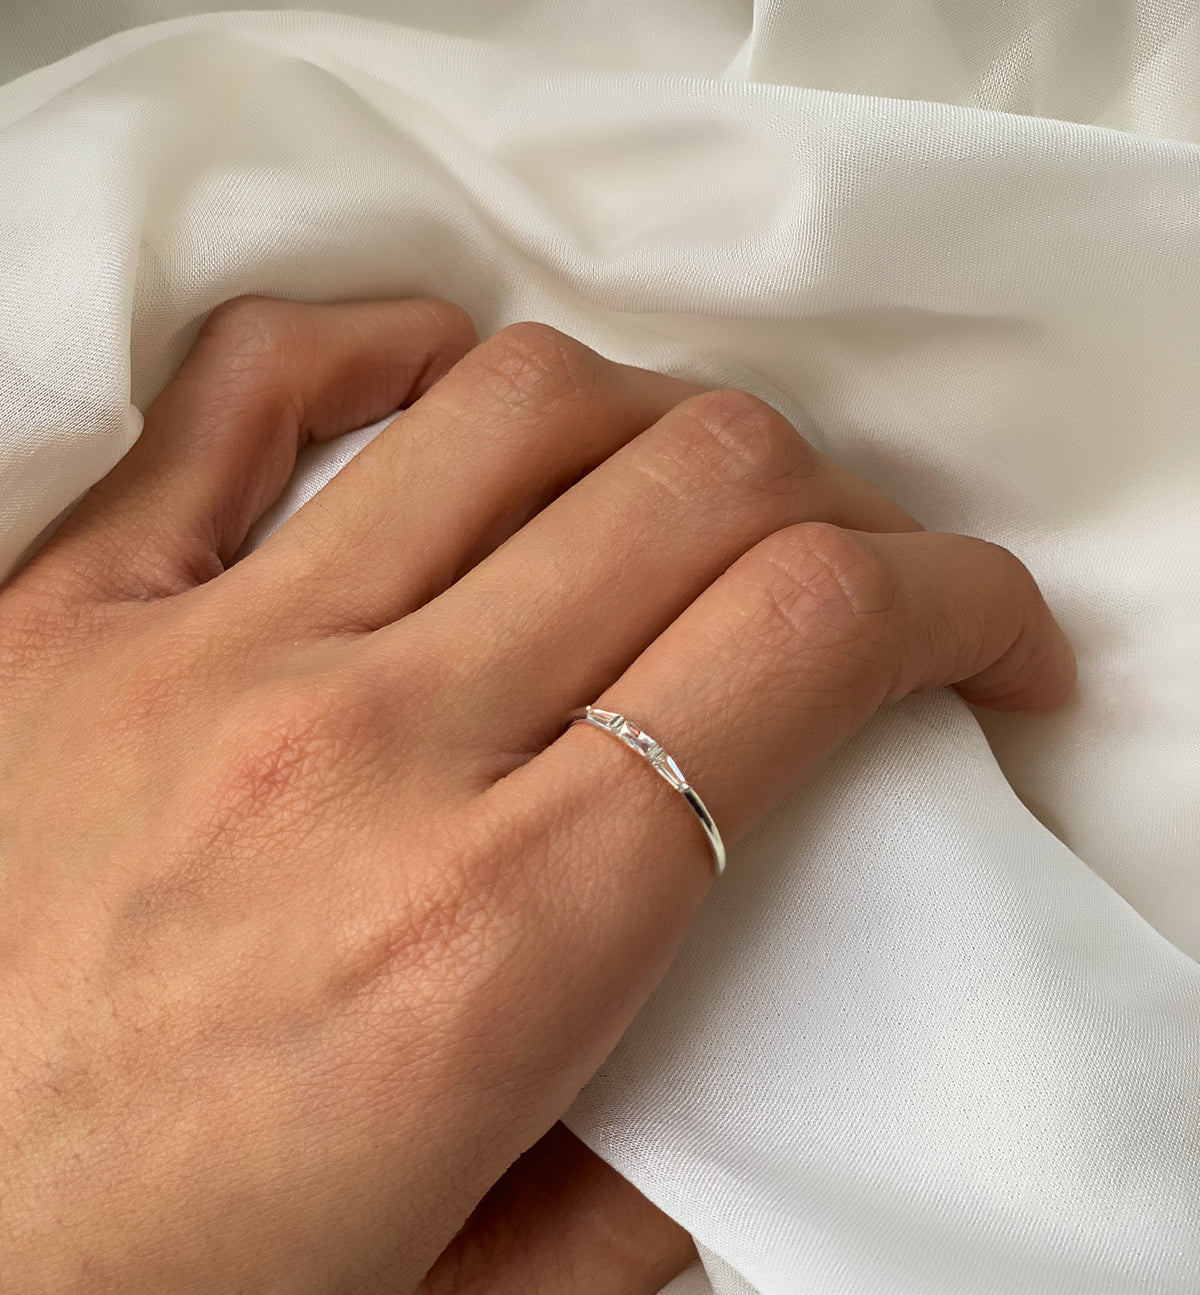 Dainty Sterling Silver Baguette Ring worn on Index Finger